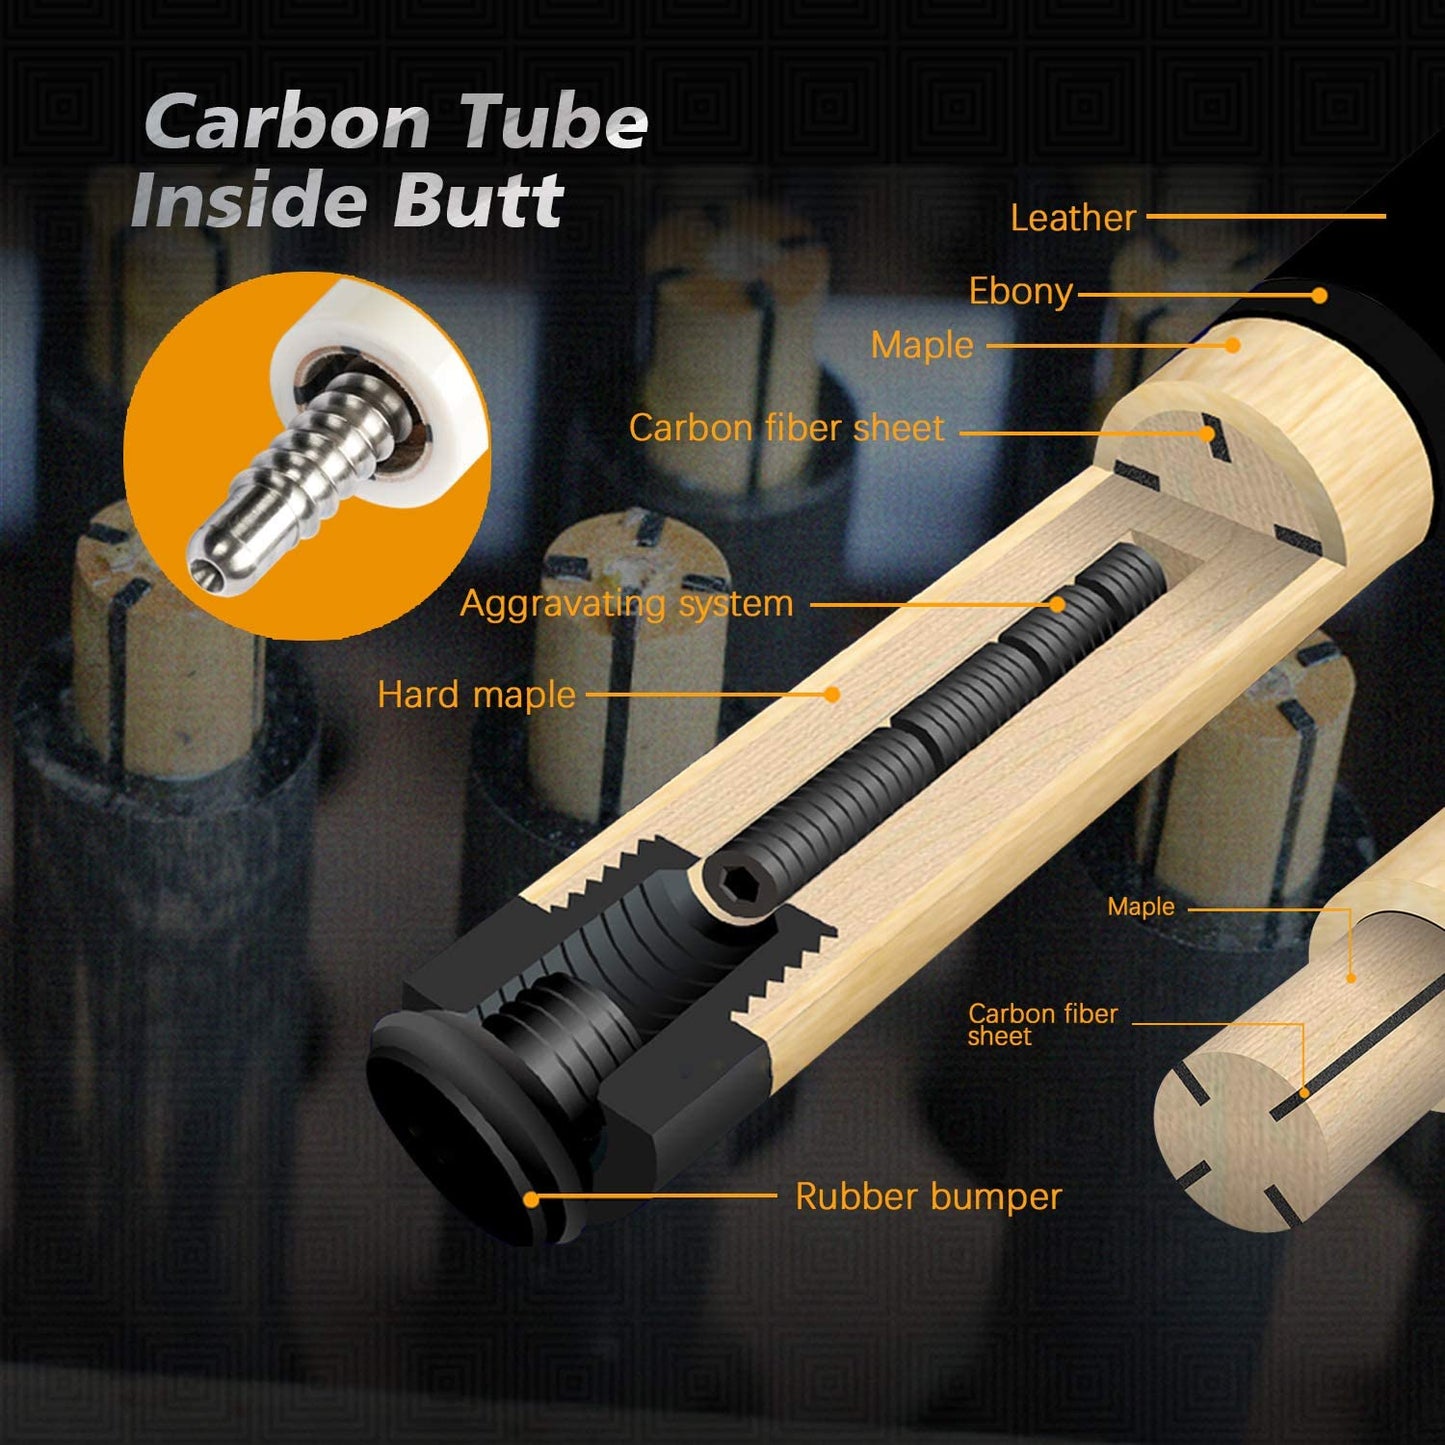 KONLLEN 3 Cushion Carom Cue Carbon Fiber Stick Technology Billiard Cue  (Silver Ring Inlay,Carbon Fiber Shaft,142cm, 12mm 3c-Plus Tip, Radial